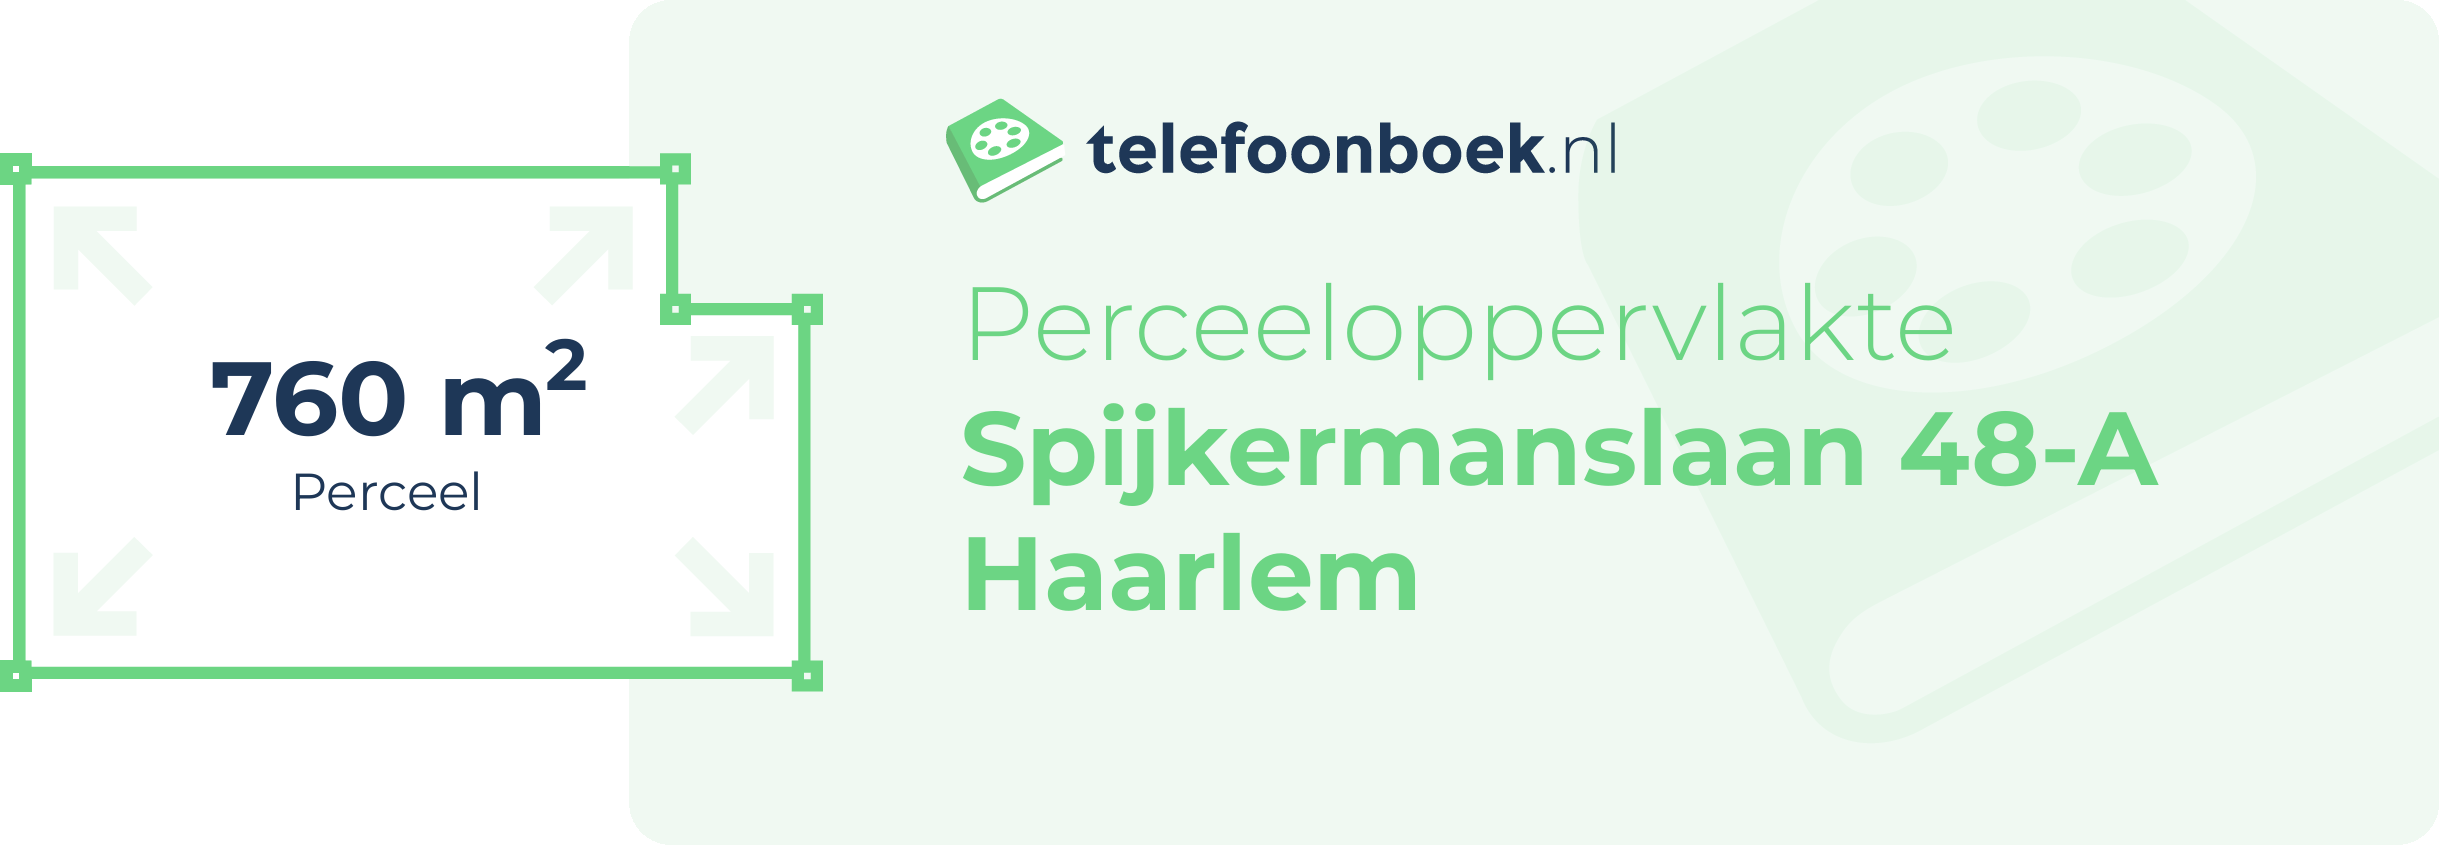 Perceeloppervlakte Spijkermanslaan 48-A Haarlem